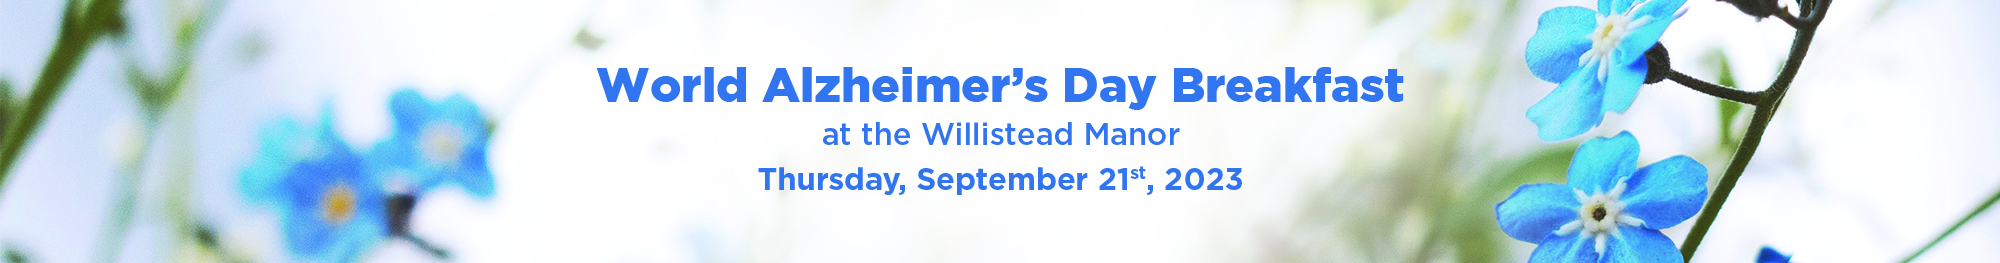 
ASWEC - World Alzheimer's Day Breakfast Banner